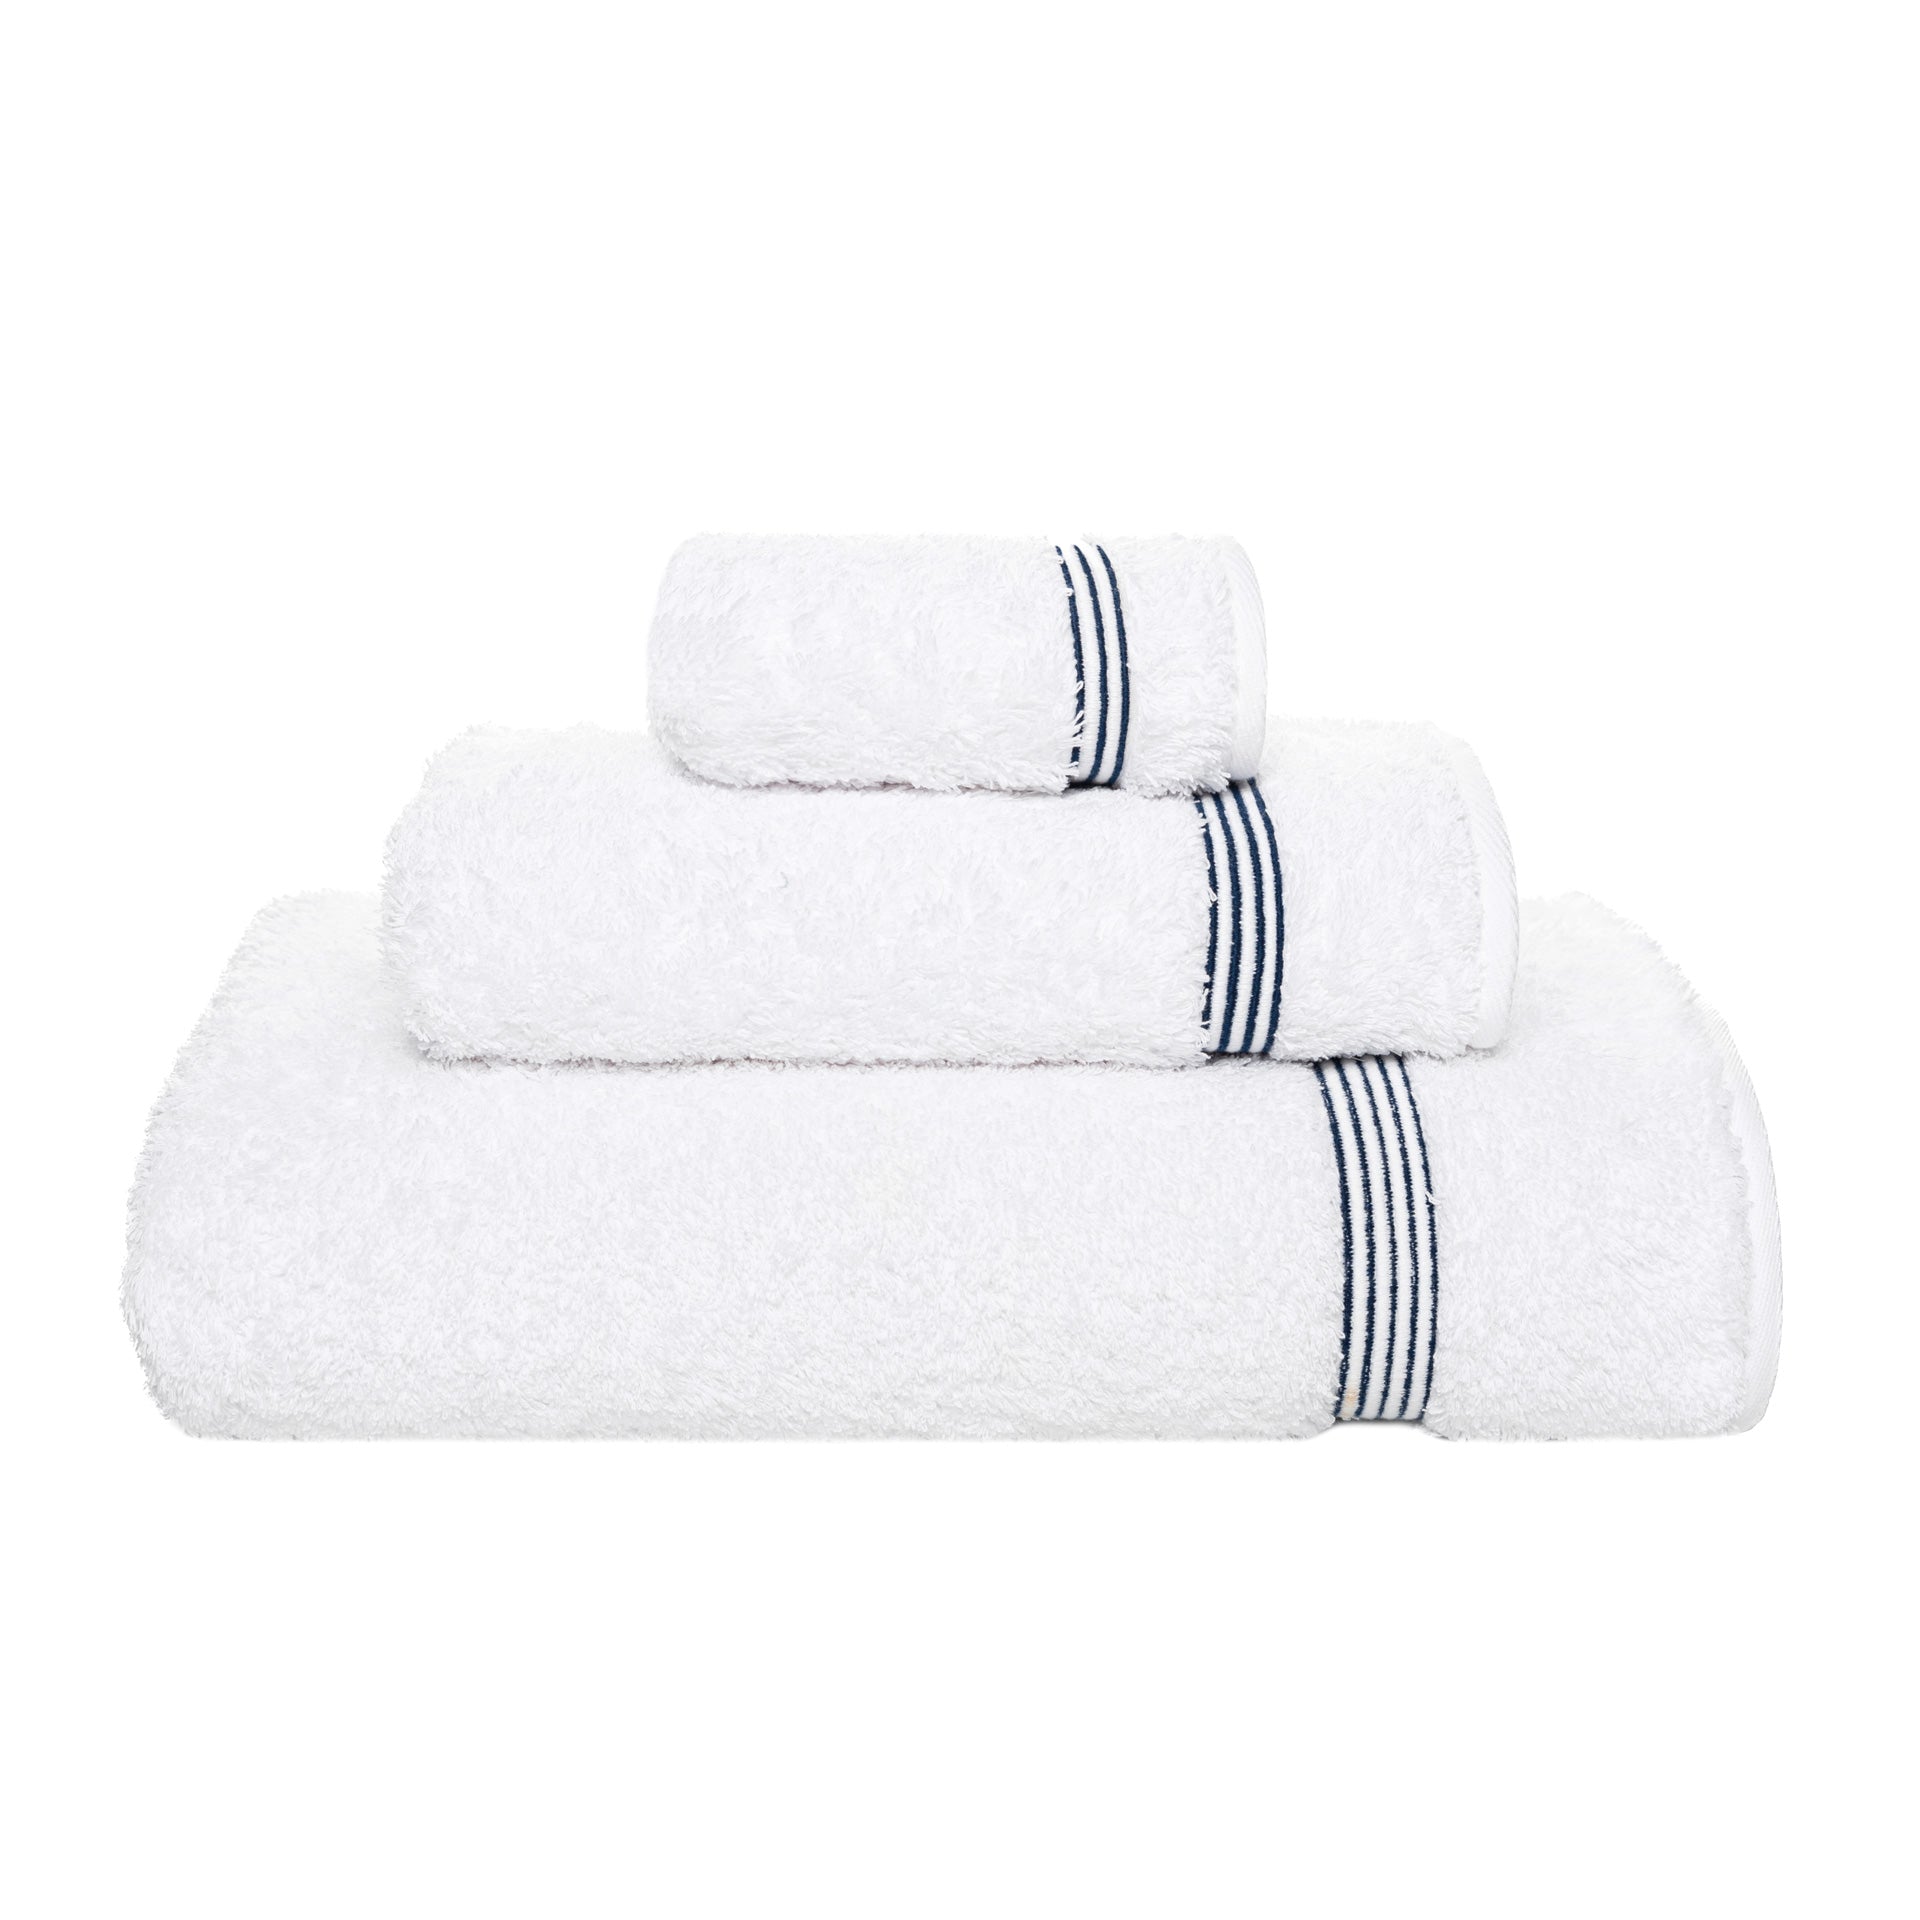 Bourdon Egyptian Cotton Bath Towel